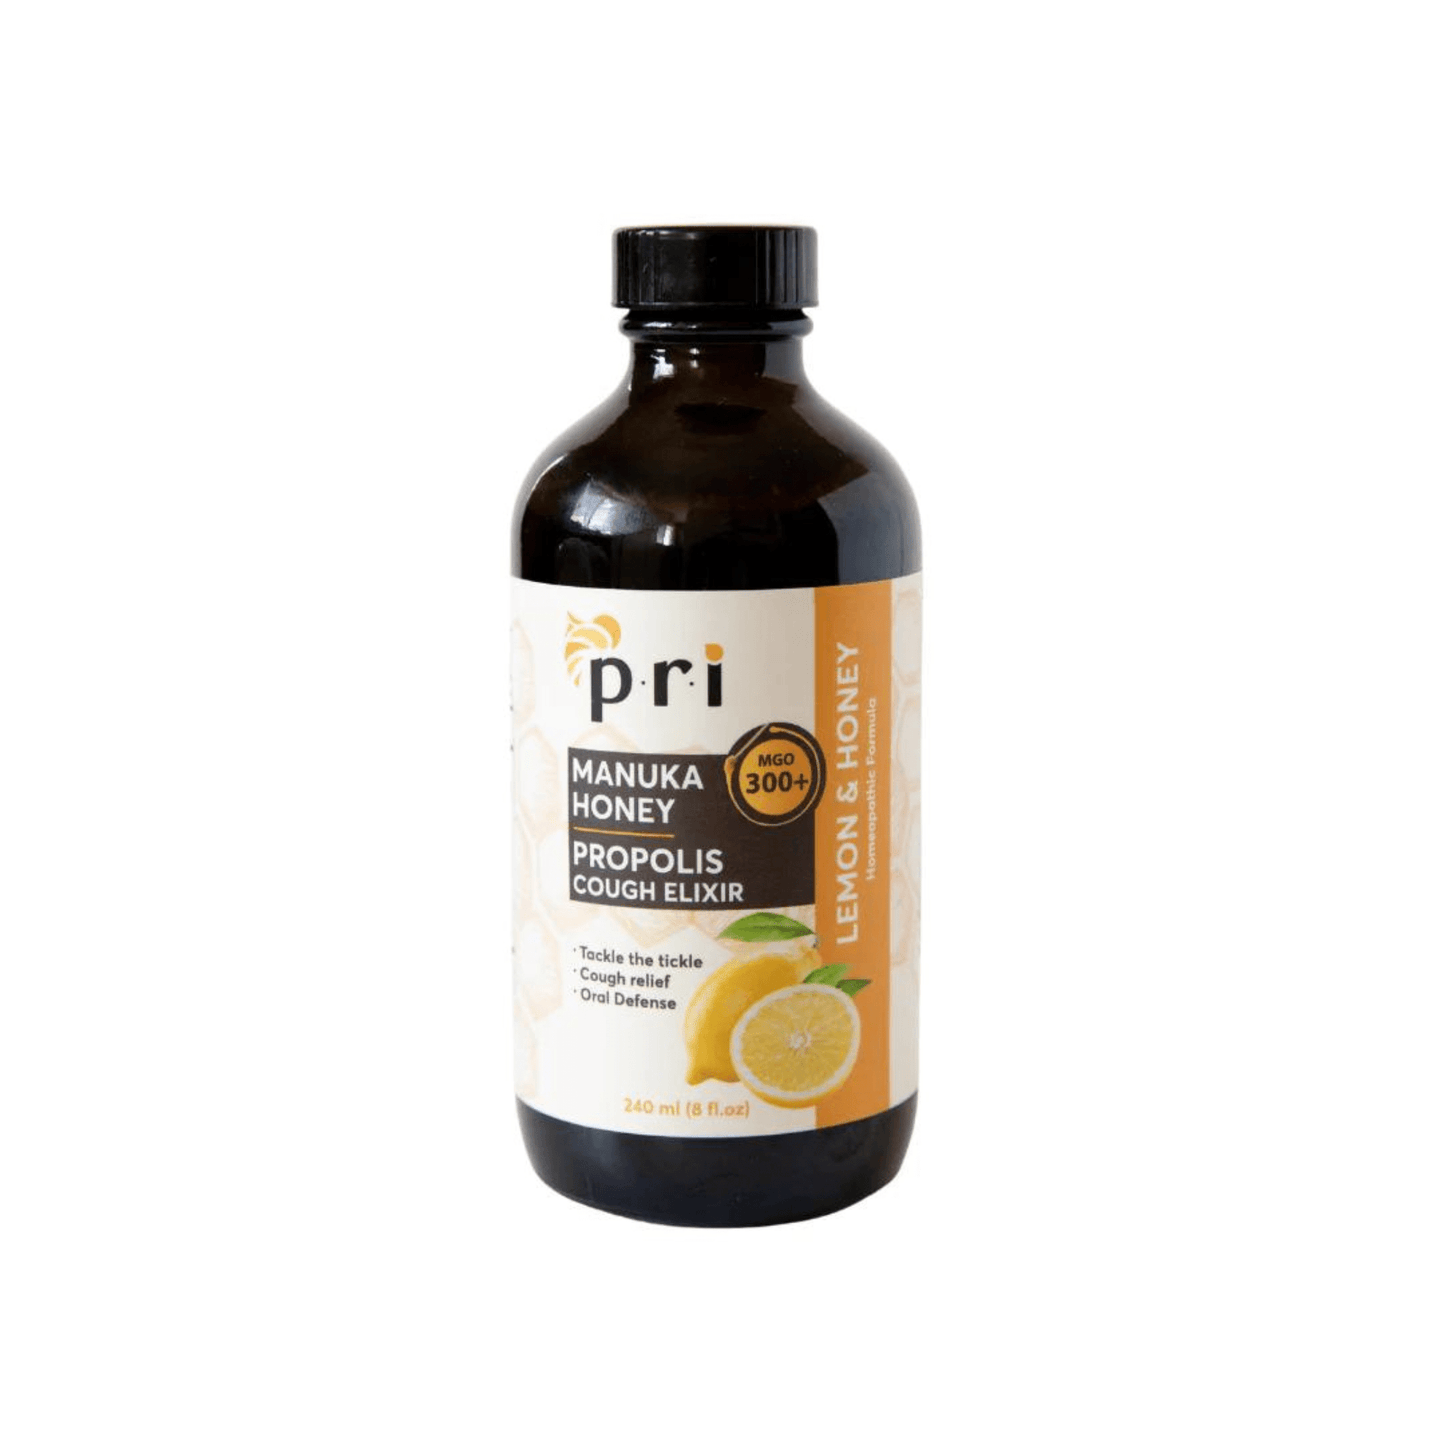 Primary Image of Lemon Honey Cough Elixir